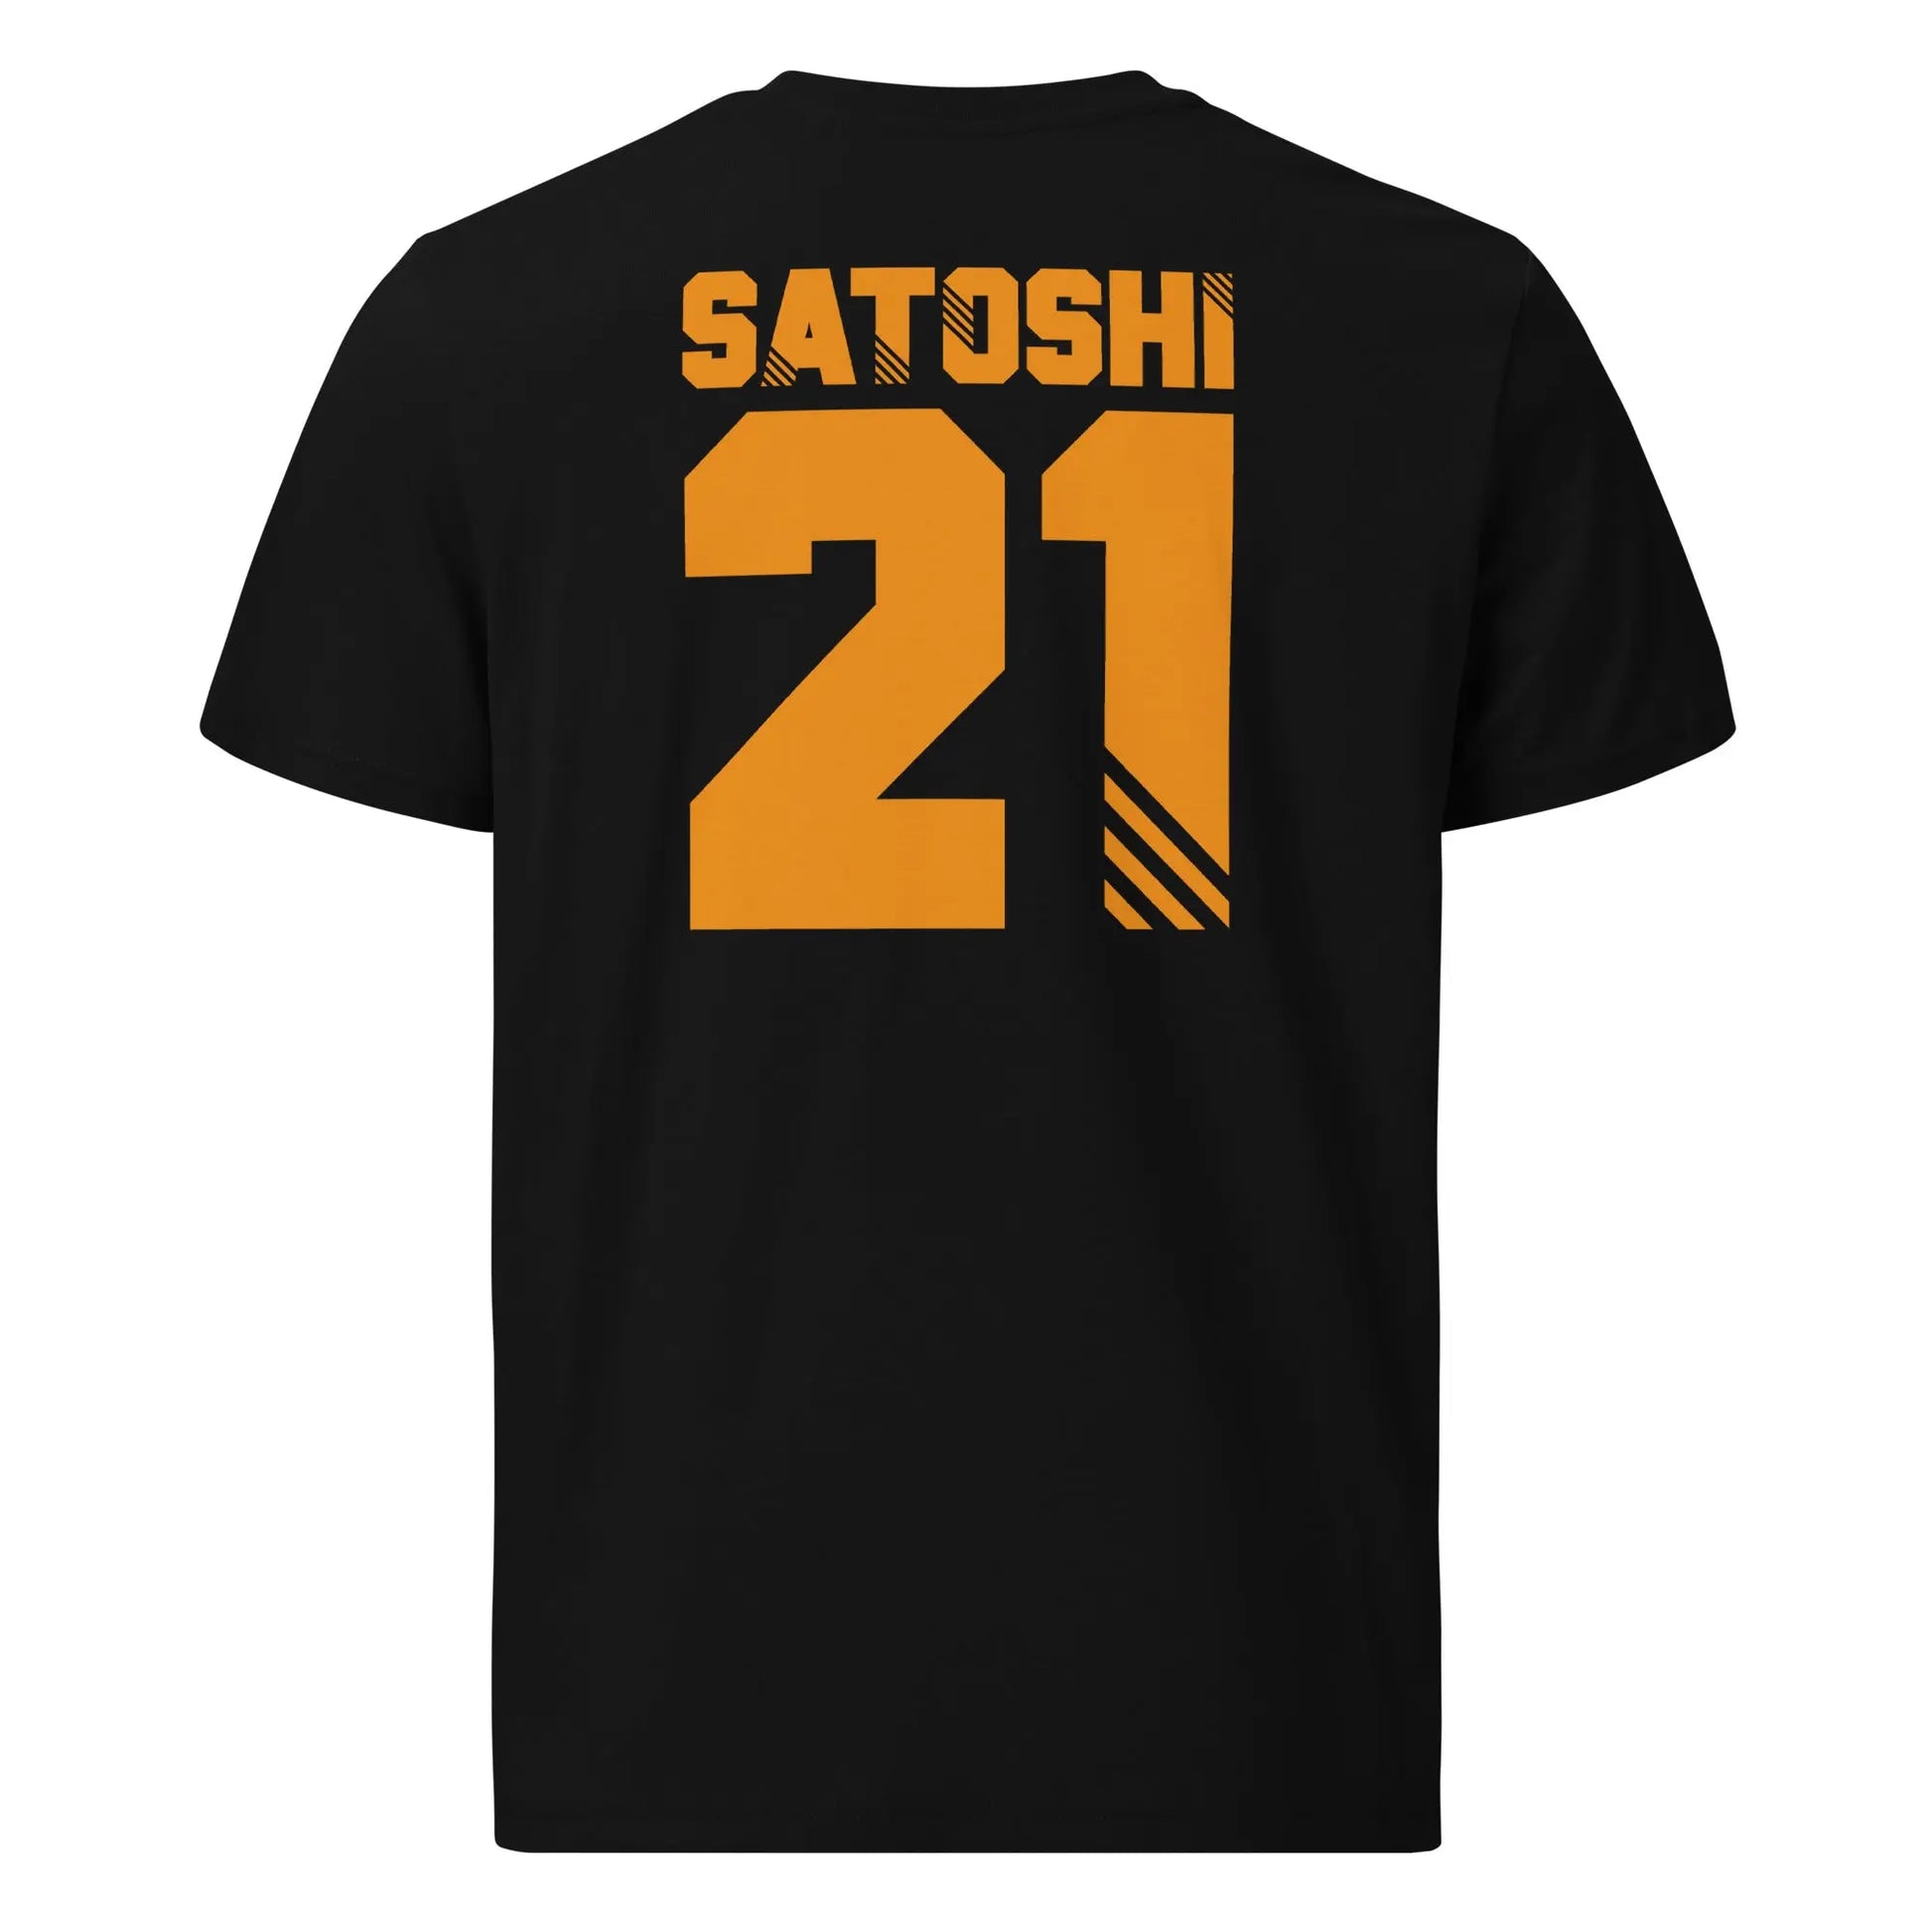 Satoshi 21 - Premium Unisex Organic Cotton Bitcoin T-shirt - Back Print Black Color